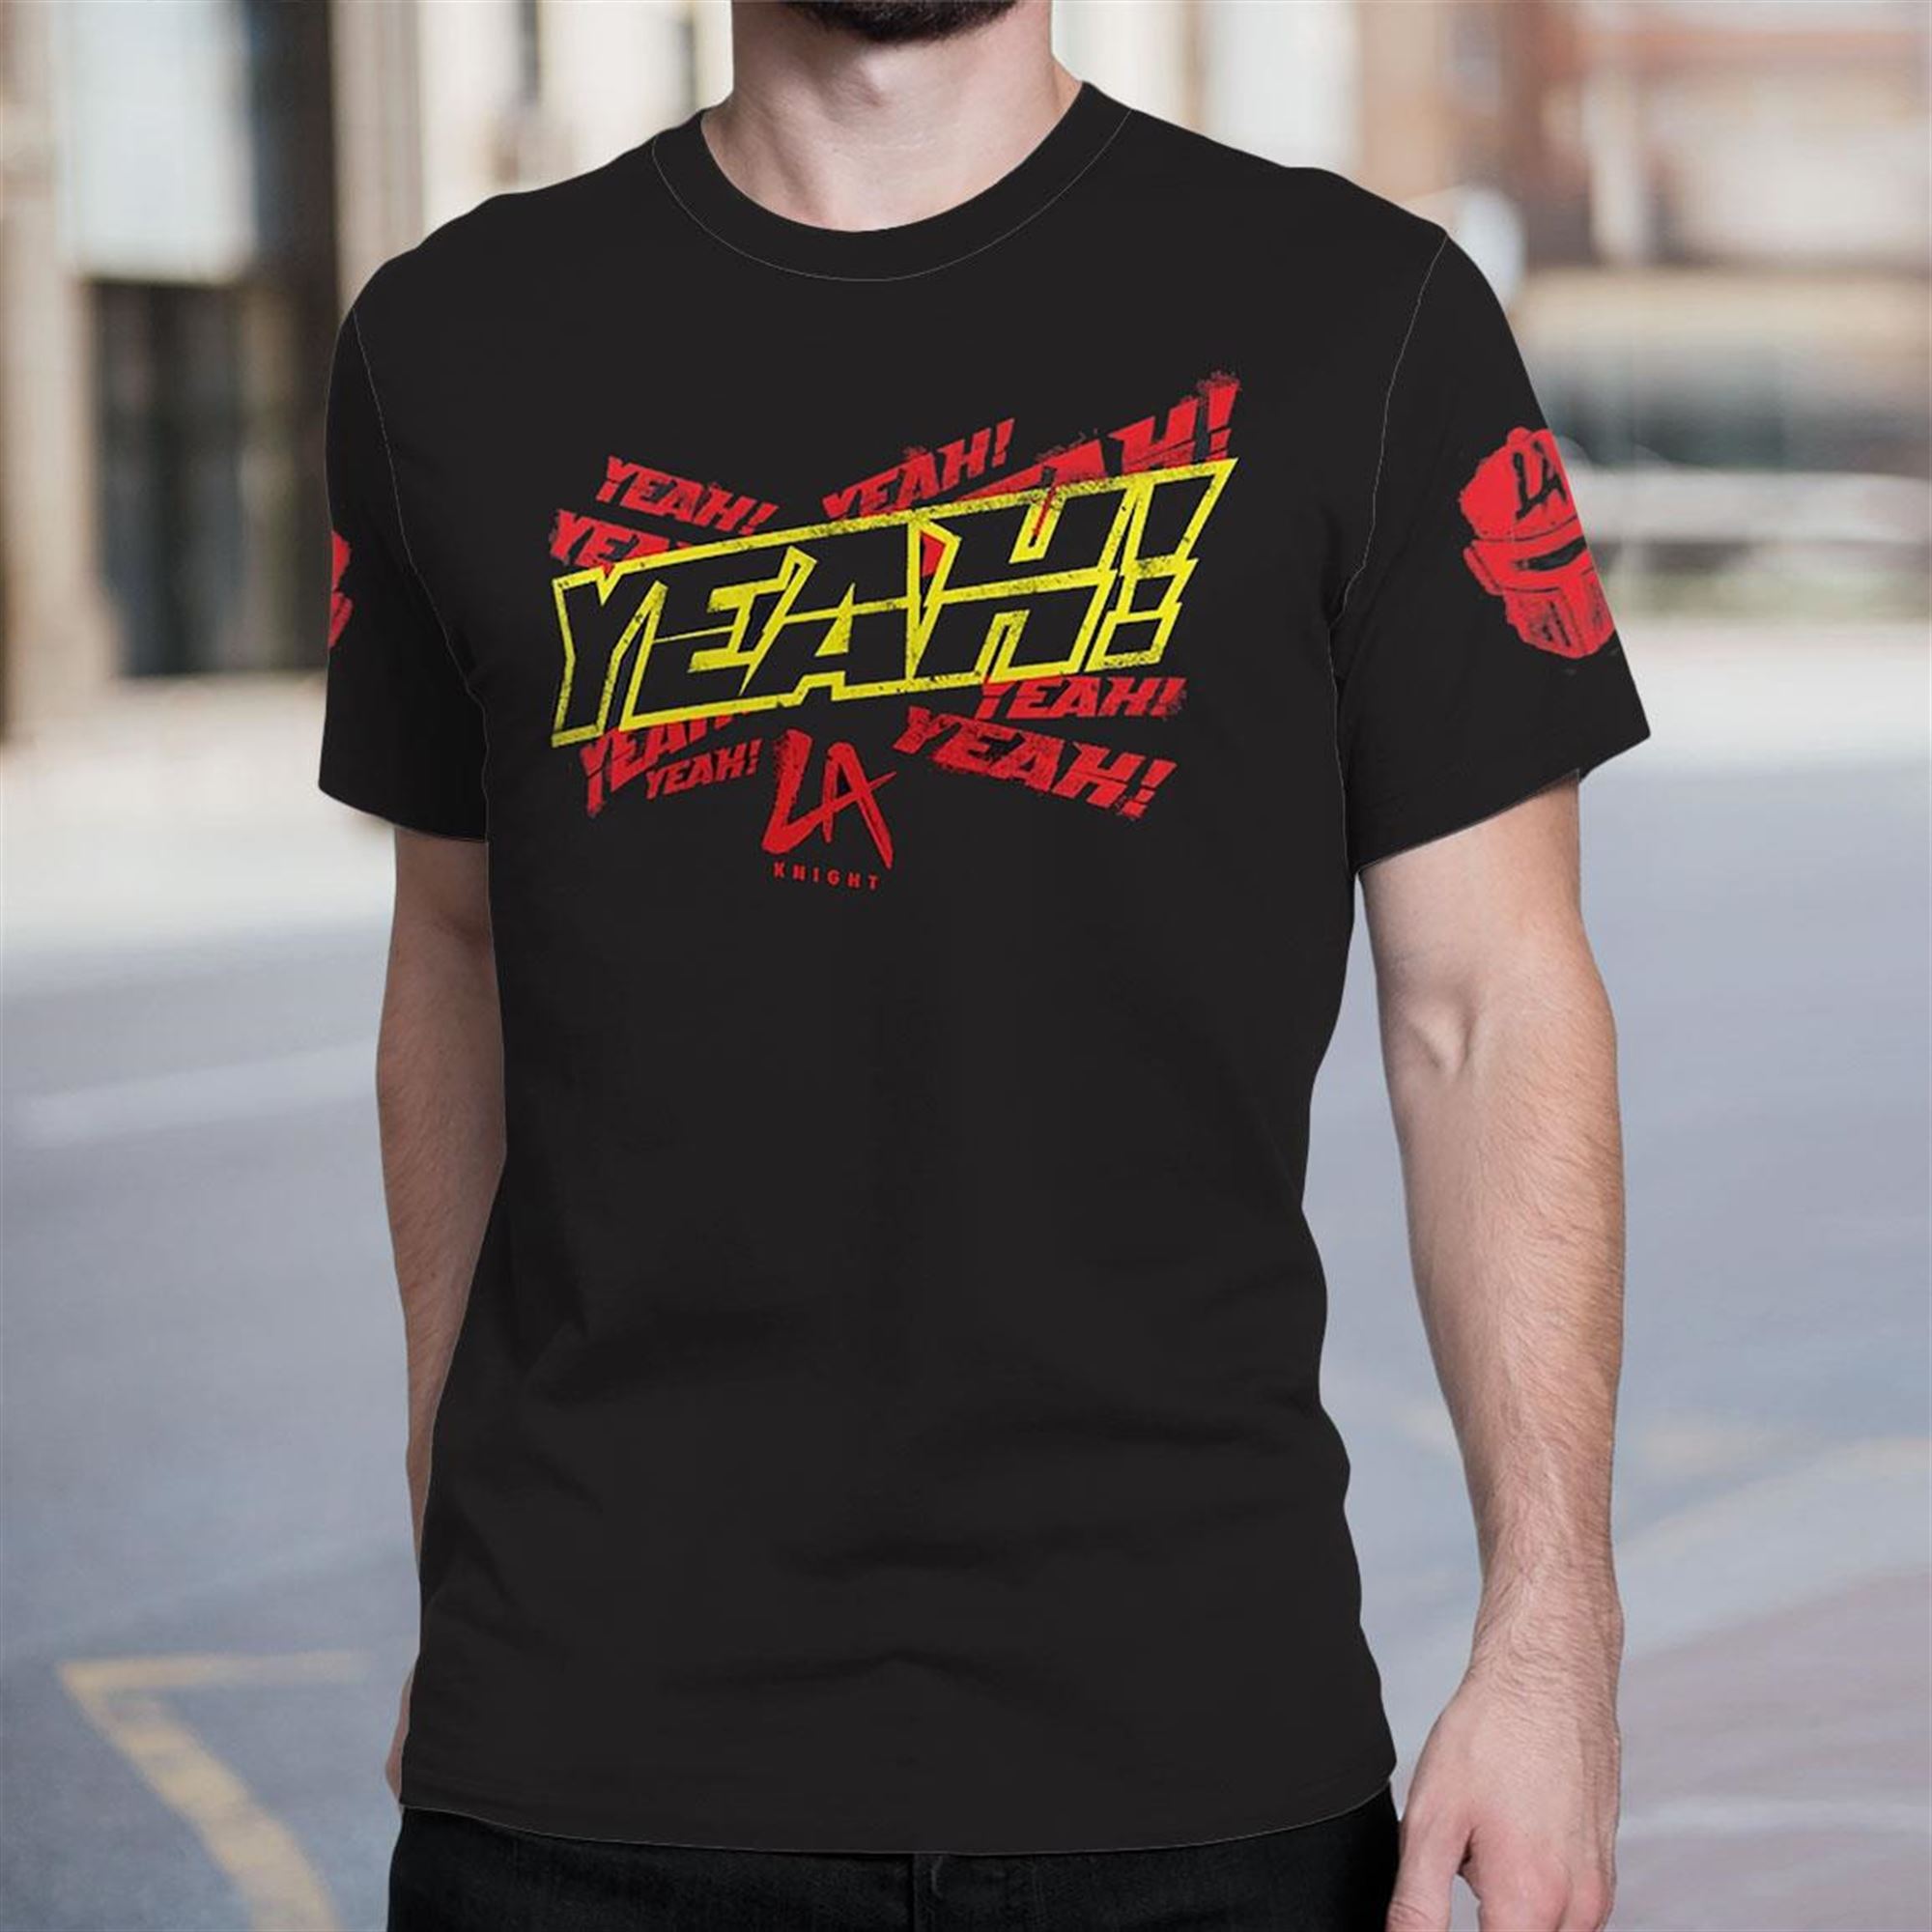 Men's Fanatics Branded Black La Knight Logo T-Shirt Size: 3XL